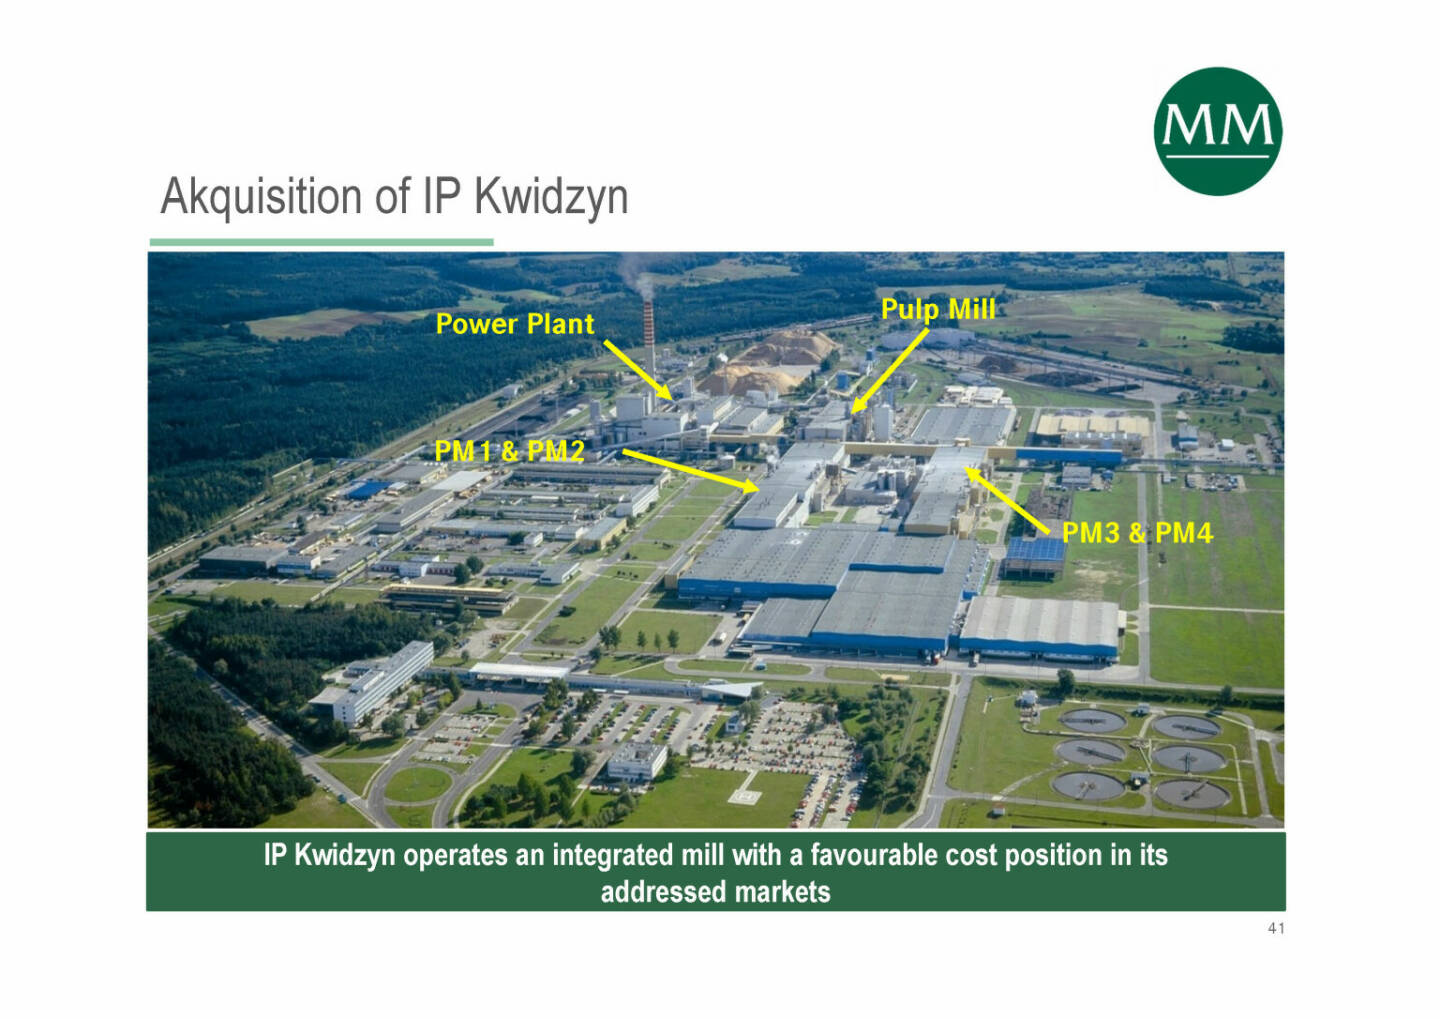 Mayr-Melnhof - Akquisition of IP Kwidzyn